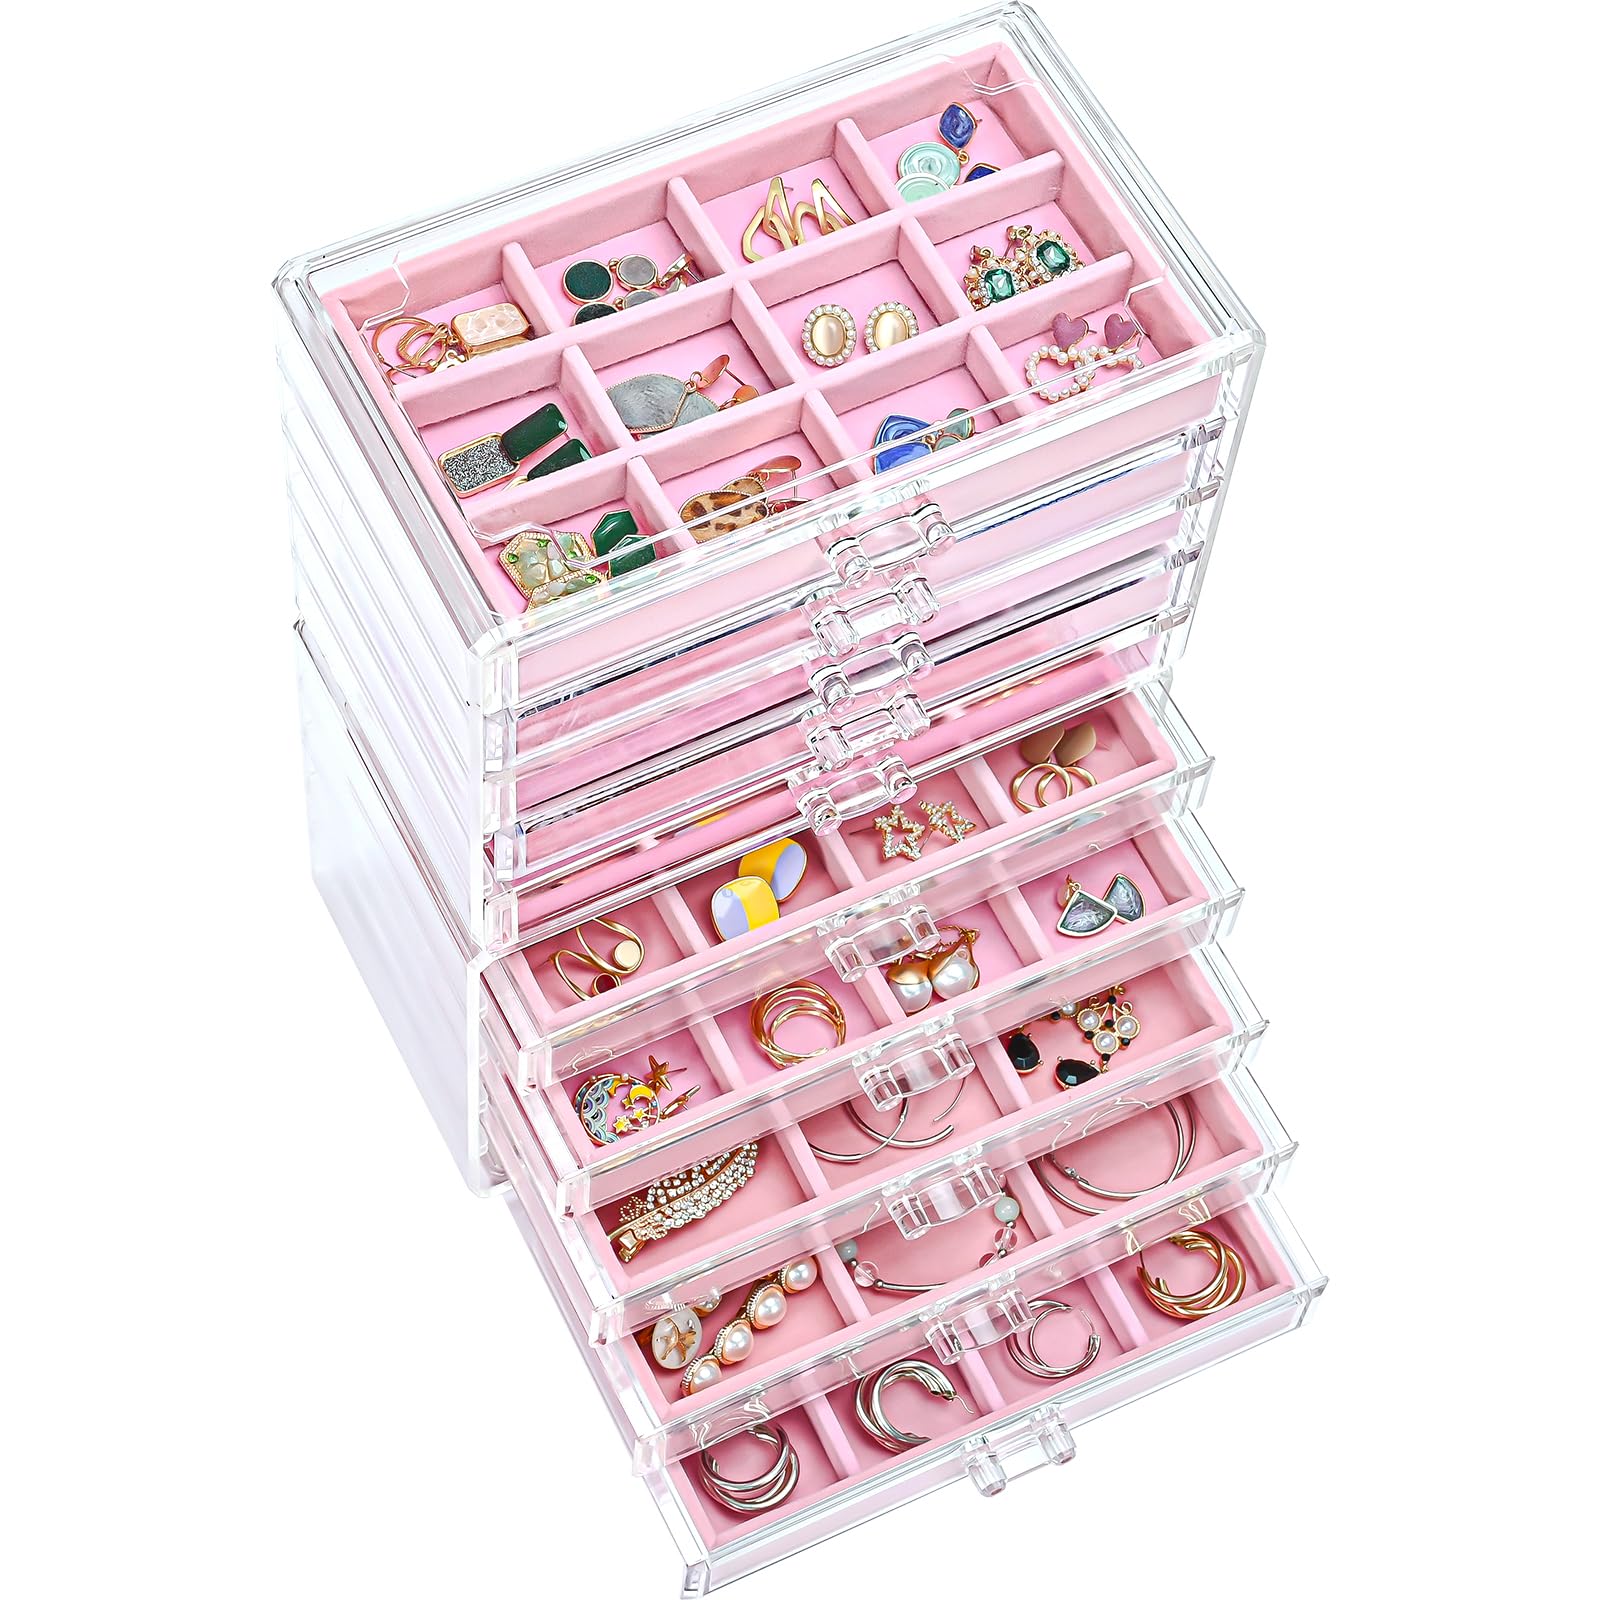 ProCase ジュエリーボックス 10層 ジュエリー収納 透明アクリル 引き出し 女性 女の子 宝石箱 アクセサリーケース オーガナイザー 小物入れ プレゼント-ピンク